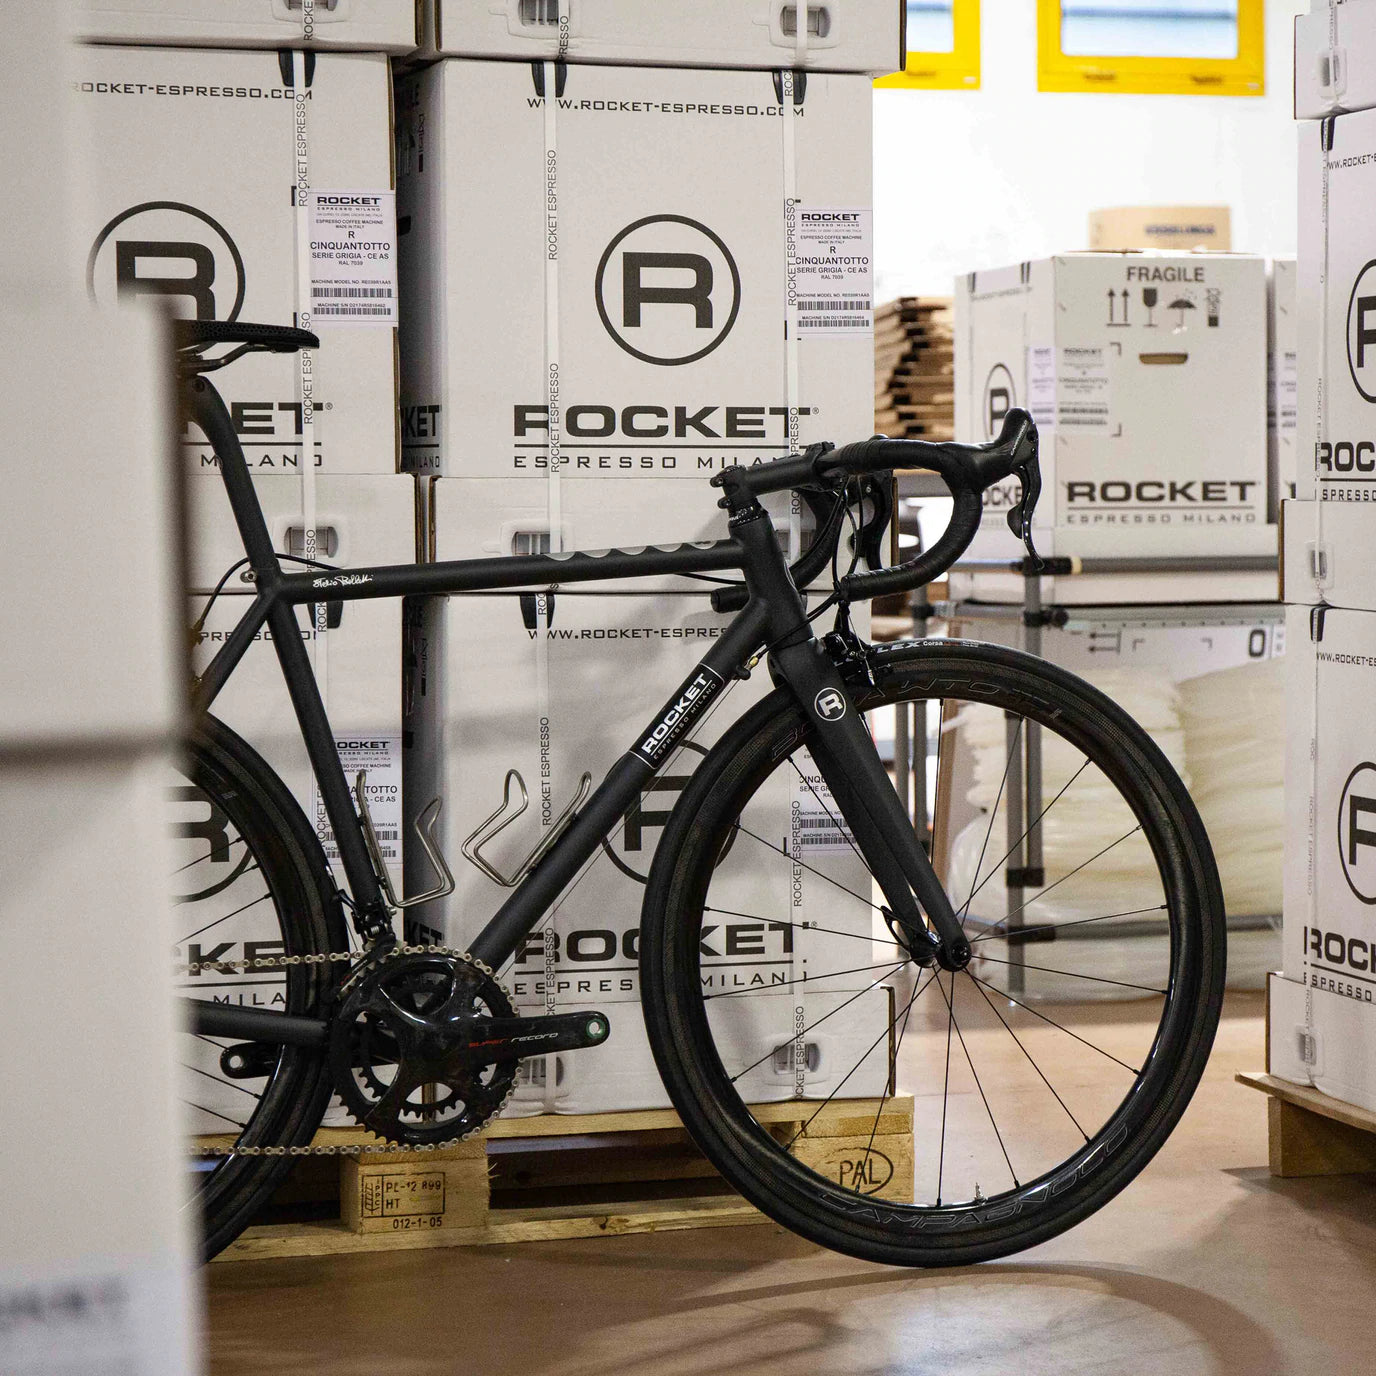 Stelbel x Rocket Espresso Limited Edition Bike